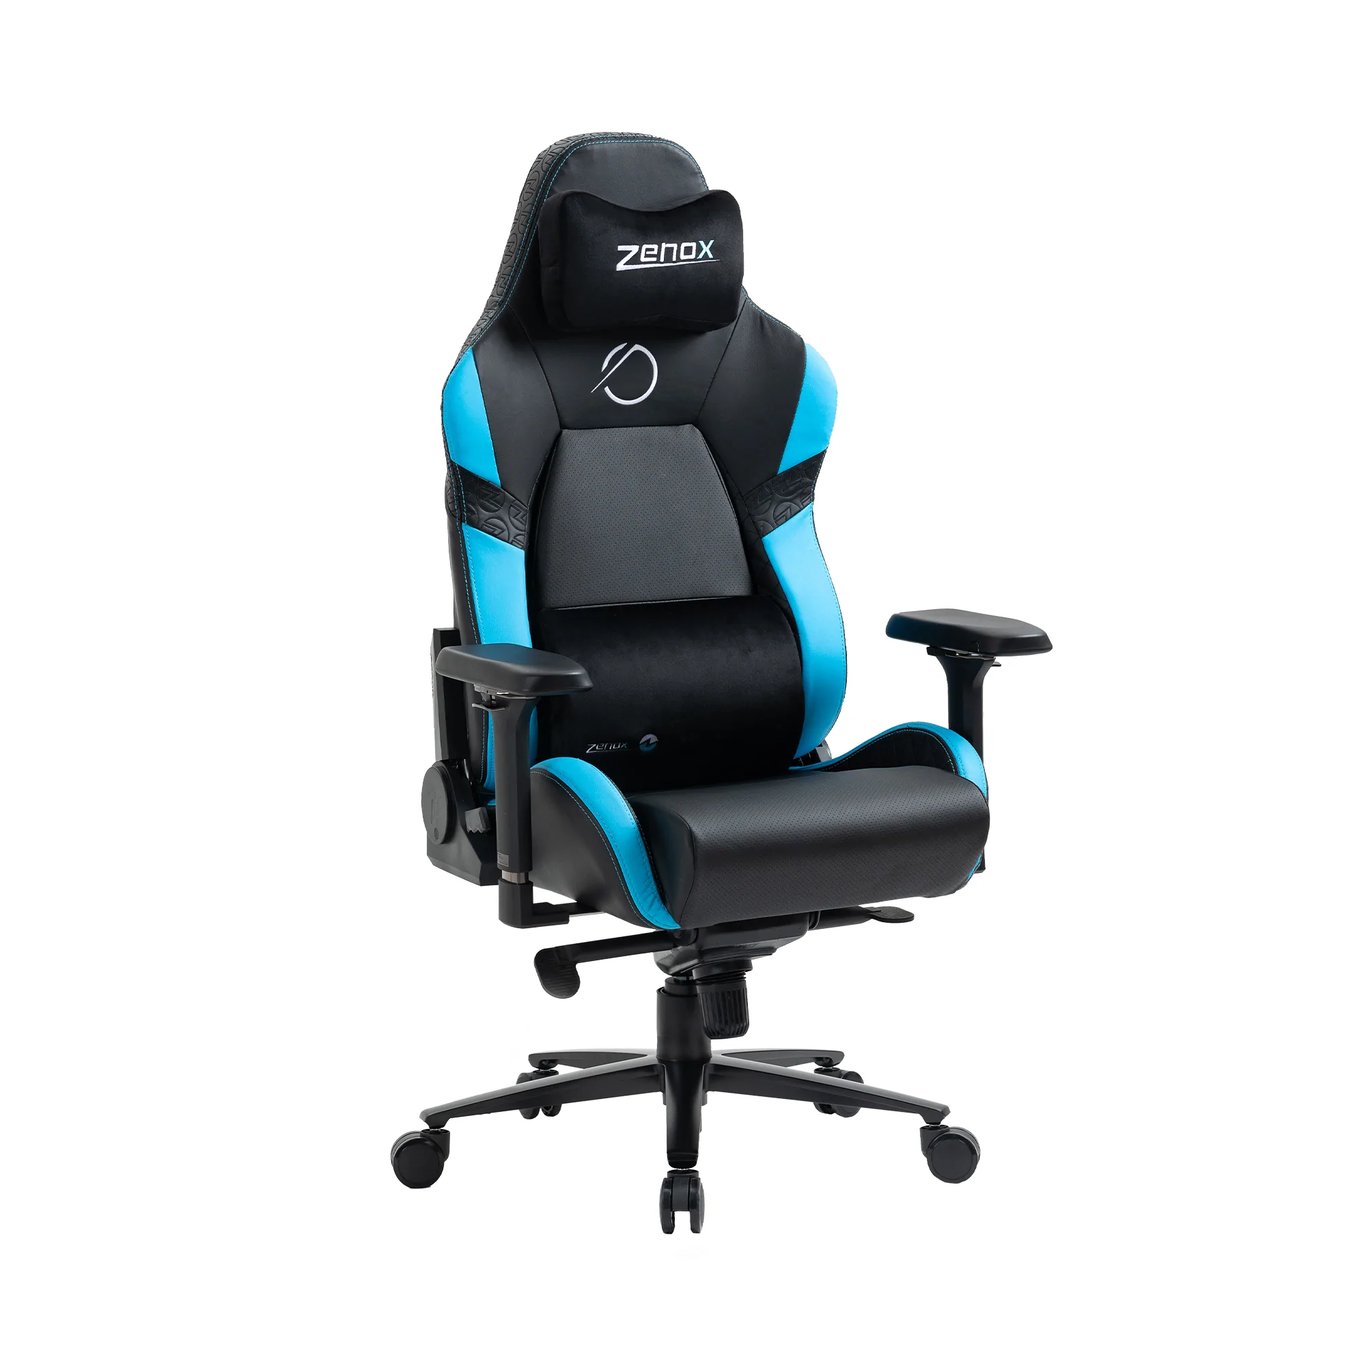 Zenox Jupiter-MK2 Racing Chair 電競椅 - Leather/Sky Blue 皮面/天藍色